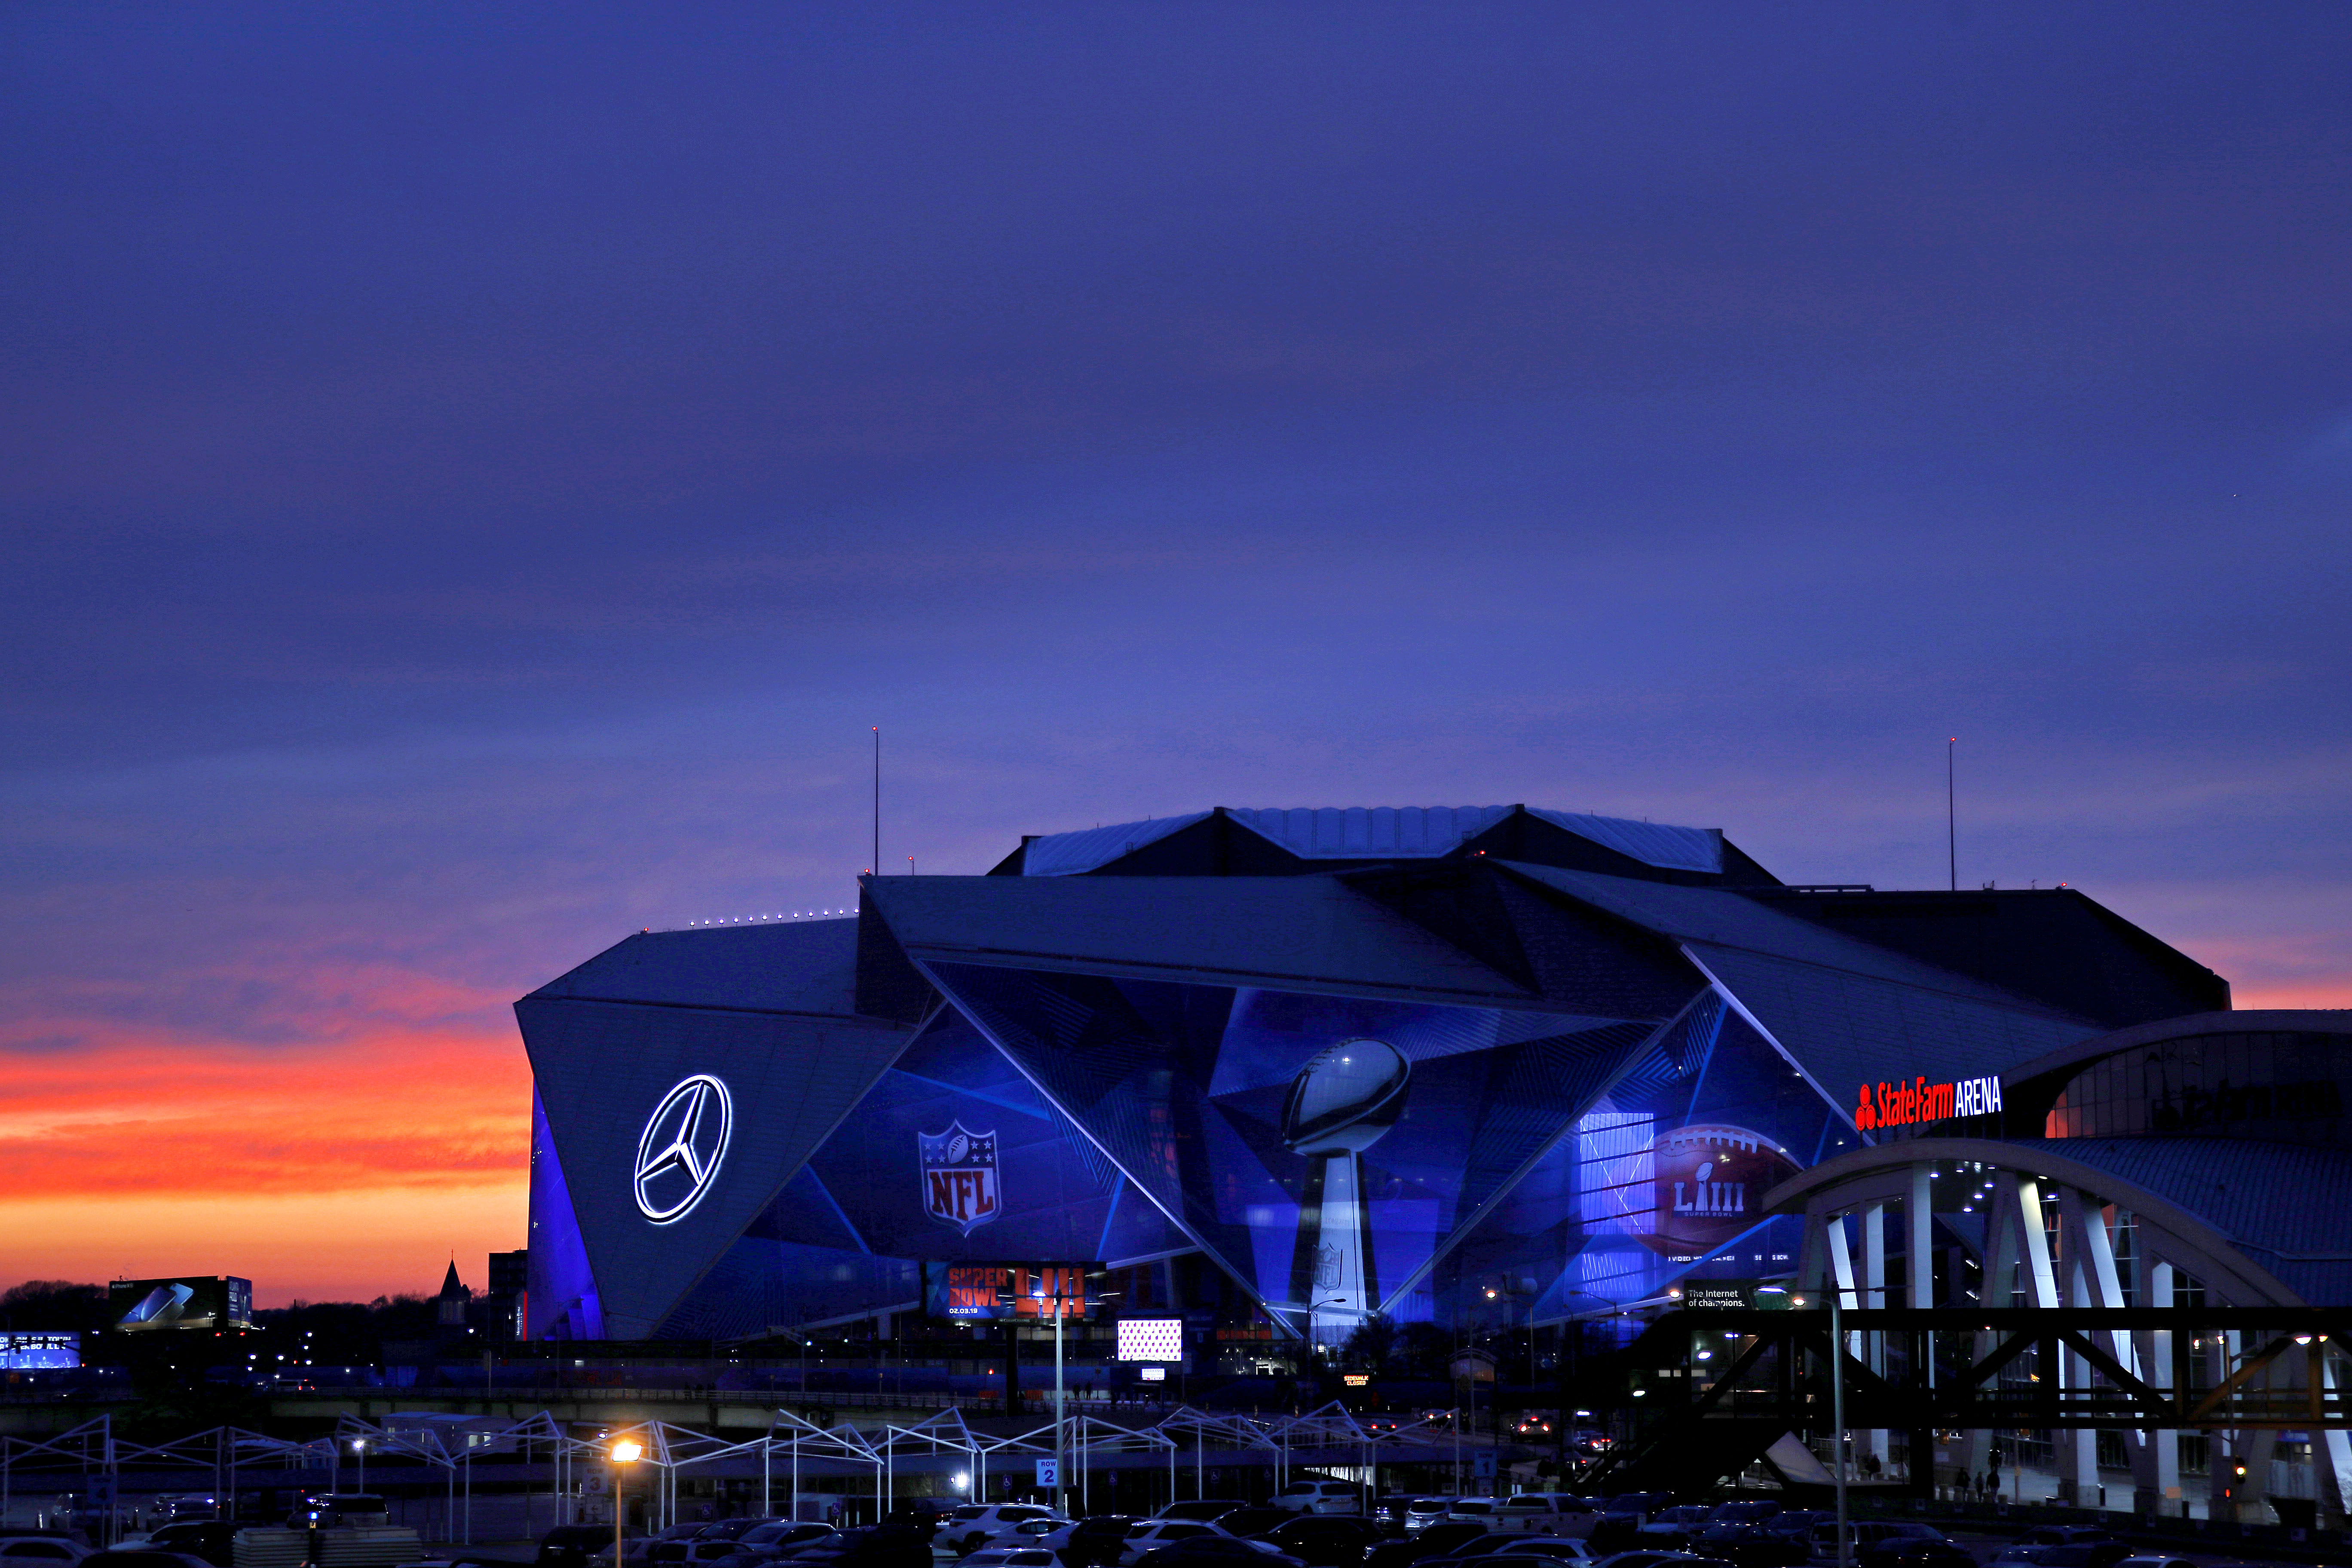 Atlanta's Mercedes-Benz Stadium 